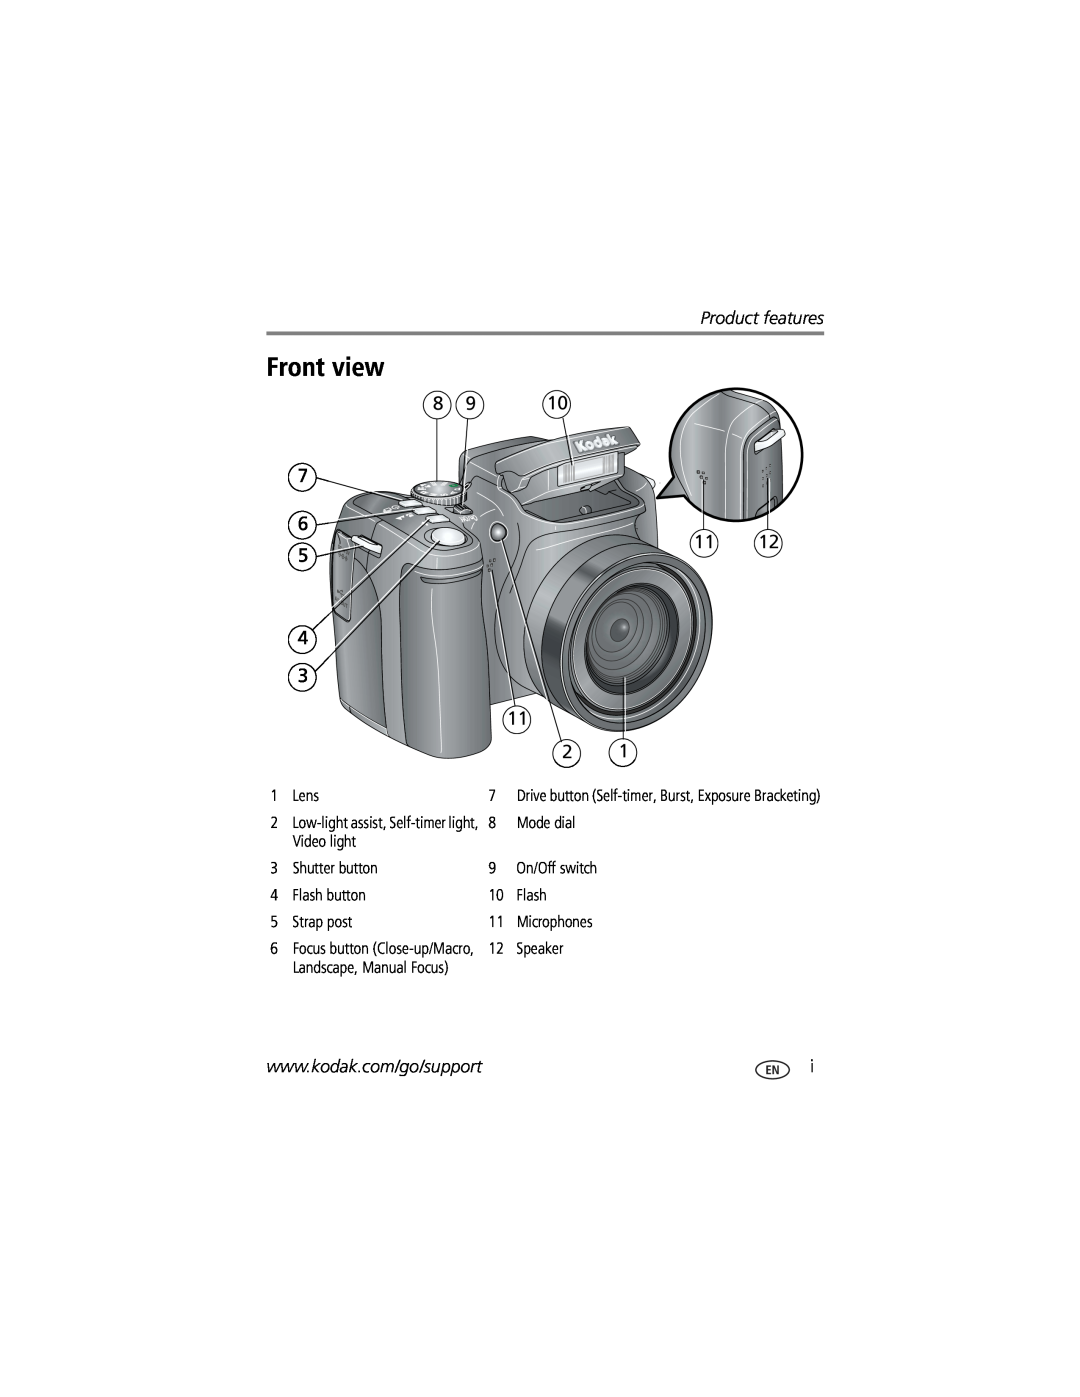 Kodak Z812 IS manual Front view, Product features, Lens, Mode dial, Video light, Shutter button, Flash button, Strap post 